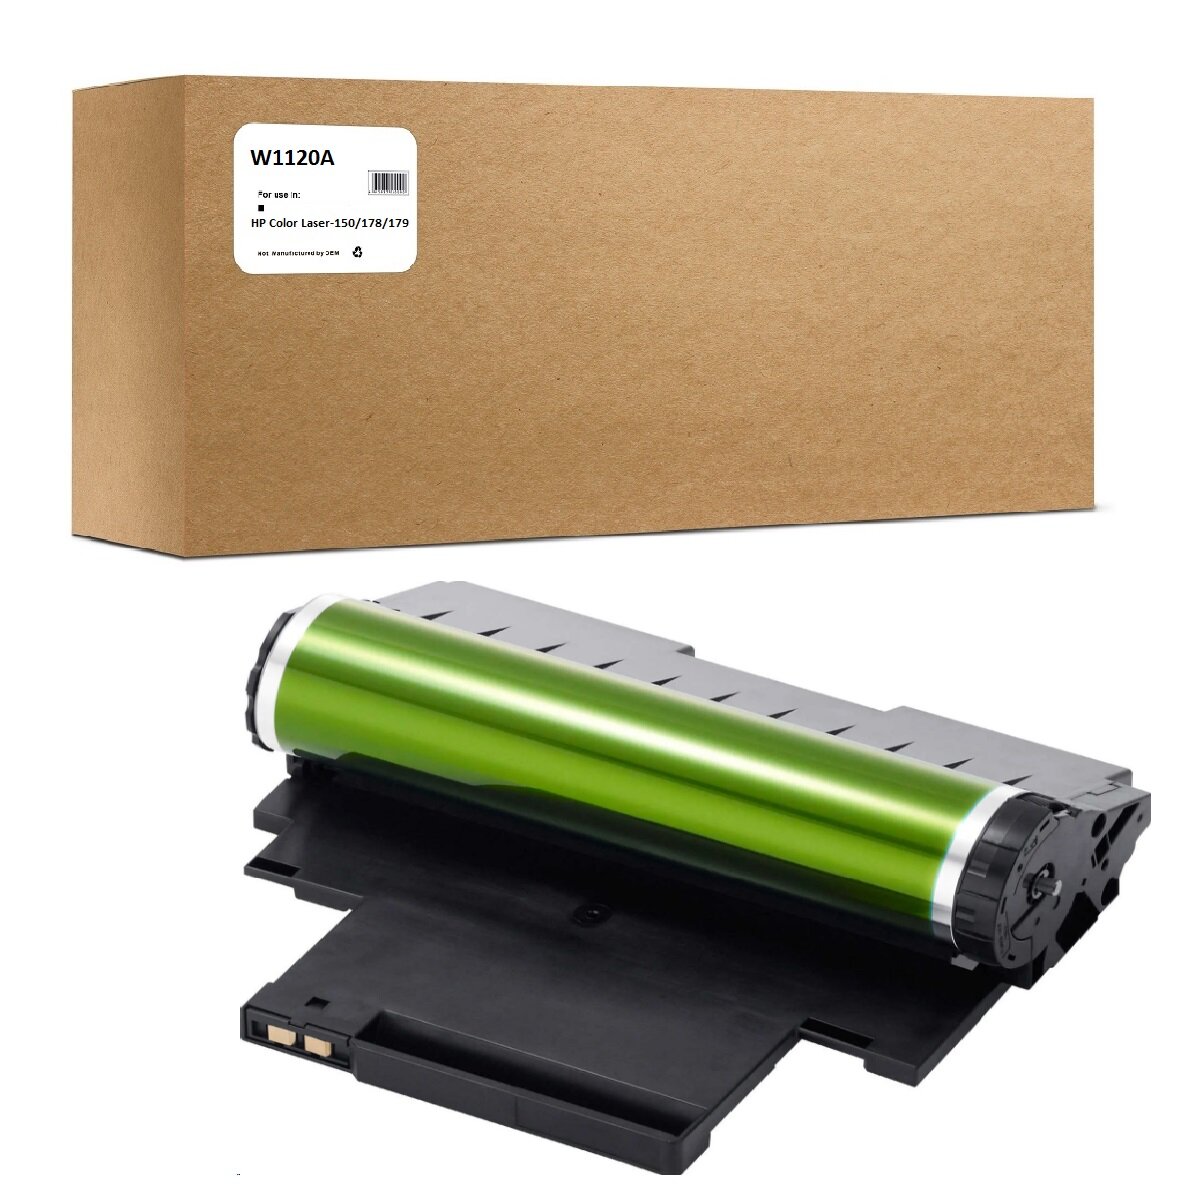 Драм-картридж W1120A для HP Color Laser-150/178/179 16K Black Compatible